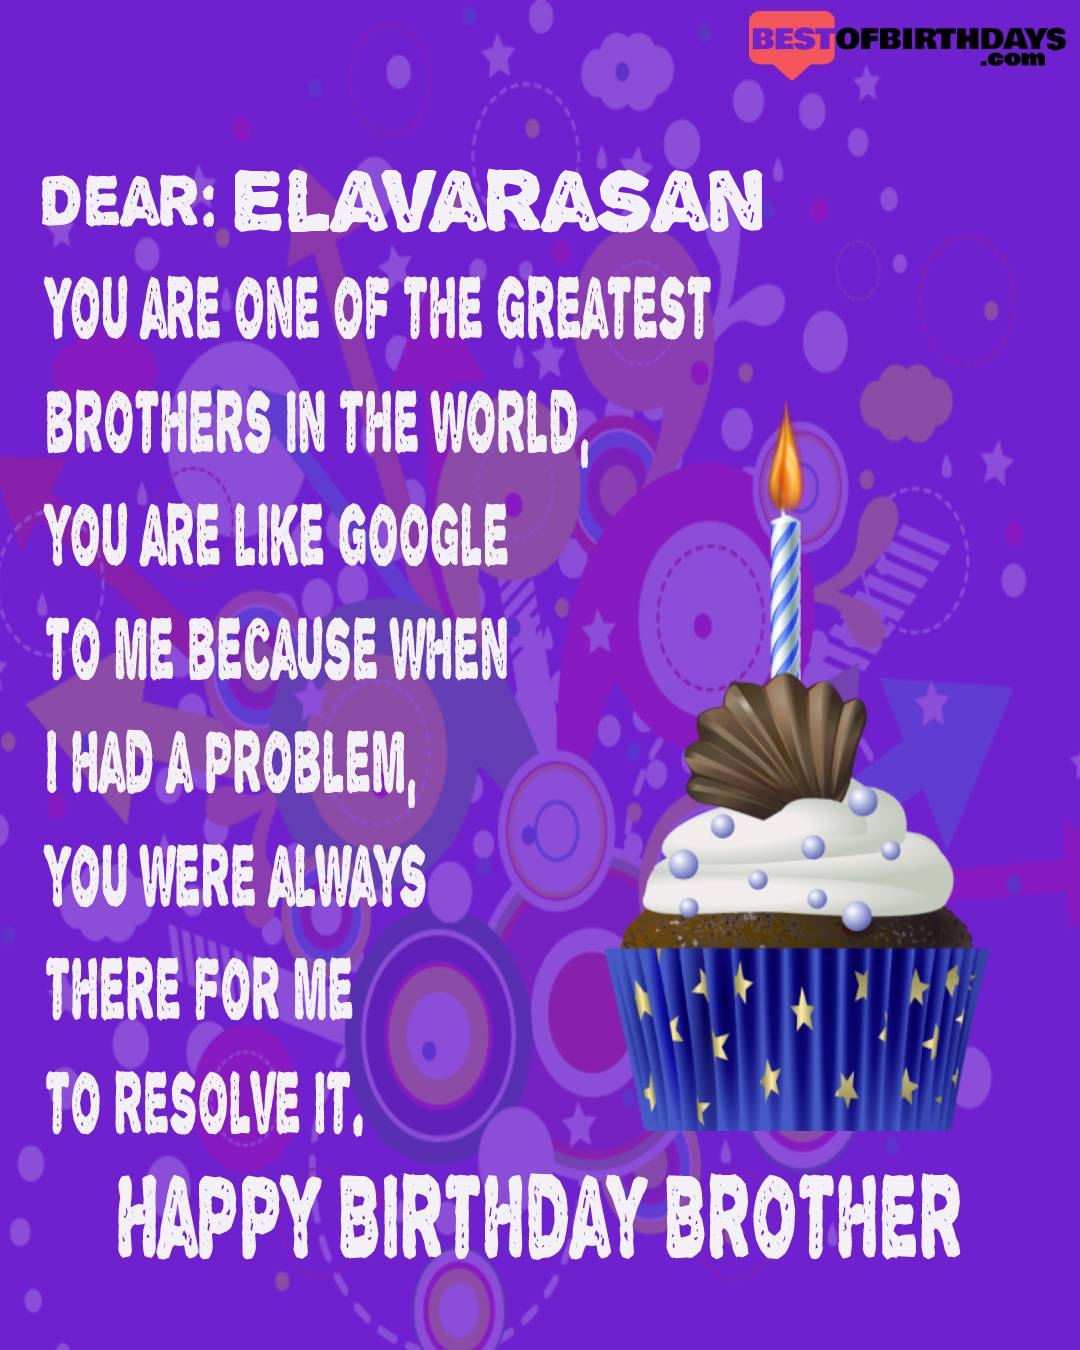 Happy birthday elavarasan bhai brother bro